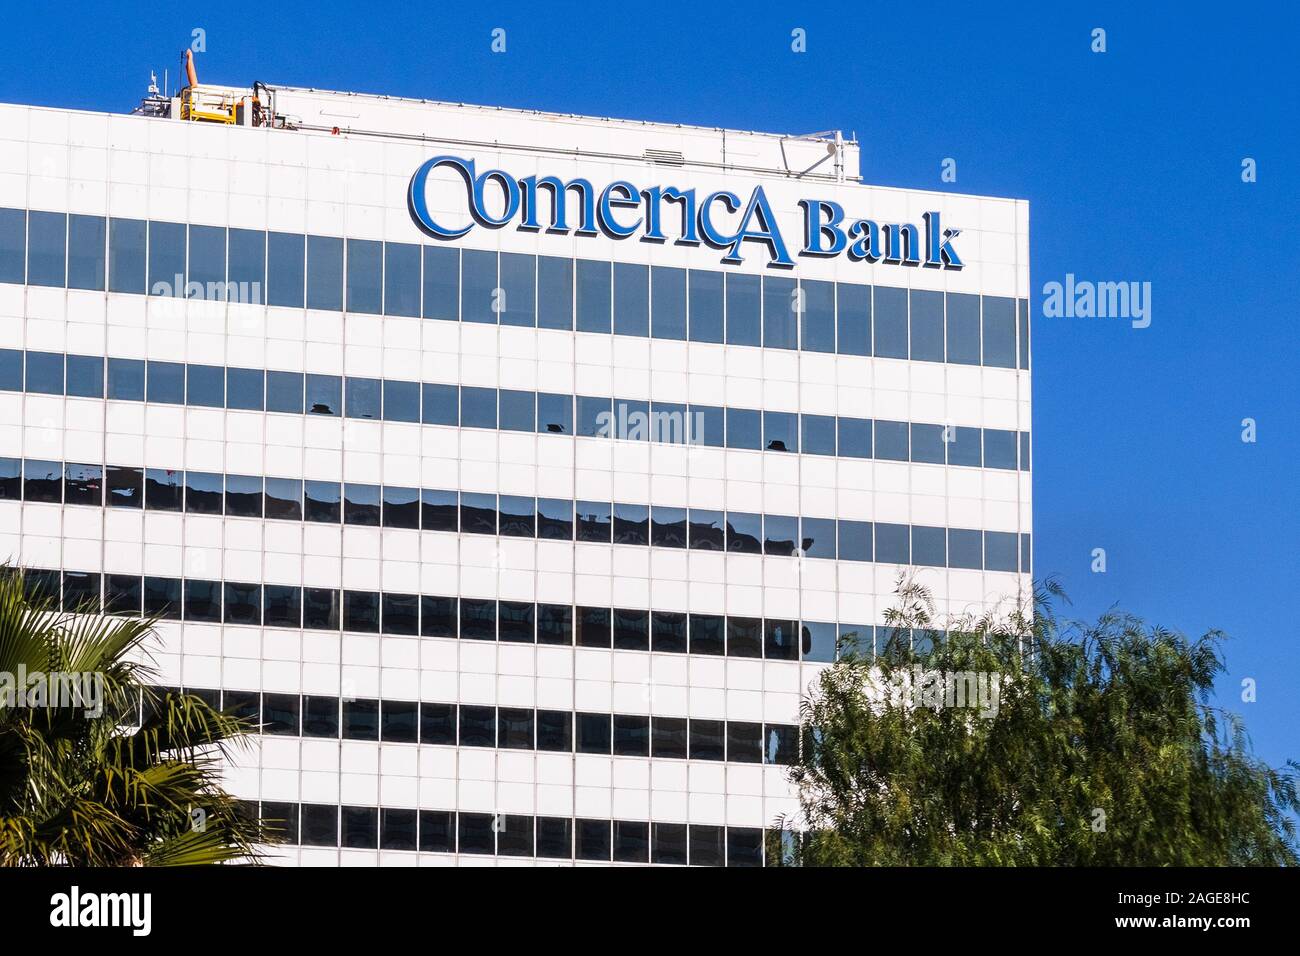 Dez 9, 2019 Los Angeles/CA/USA - die Comerica Bank Filiale; Comerica Incorporated ist ein Unternehmen mit Sitz in Dallas, Texas Stockfoto